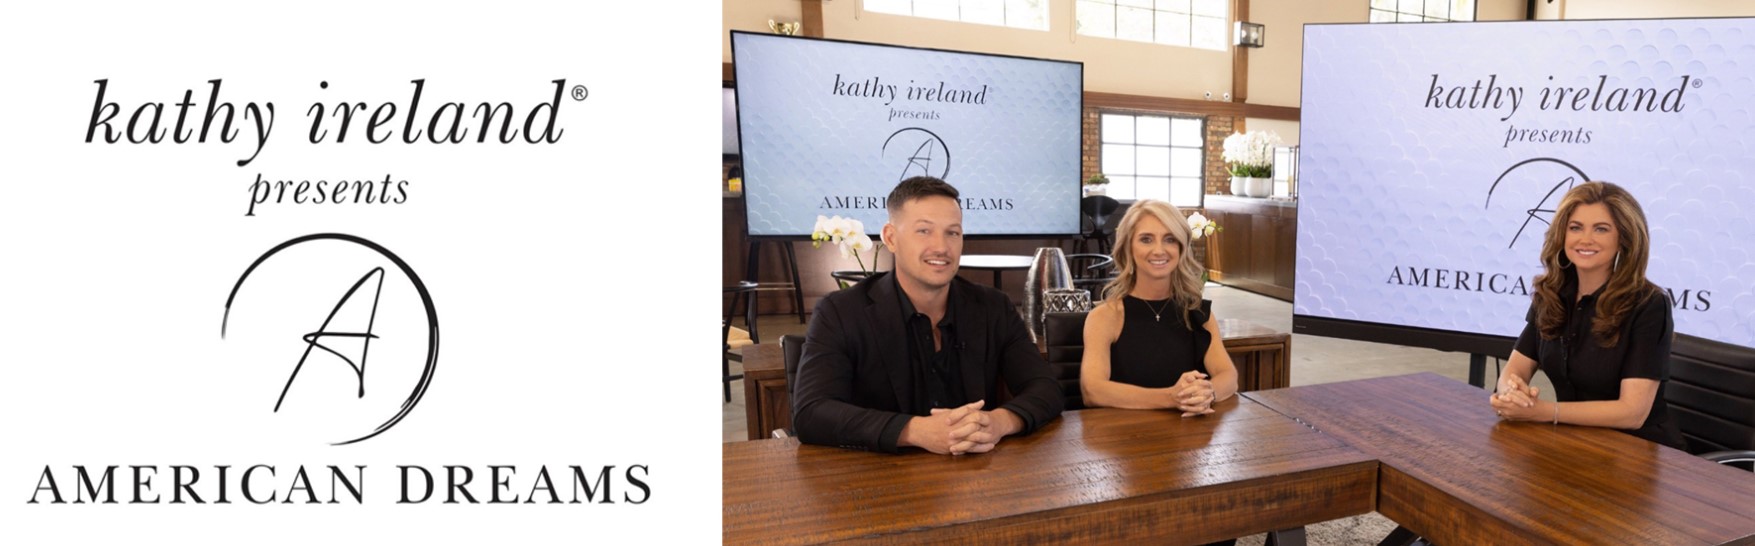 kathy ireland presents American Dreams on Your Home TV